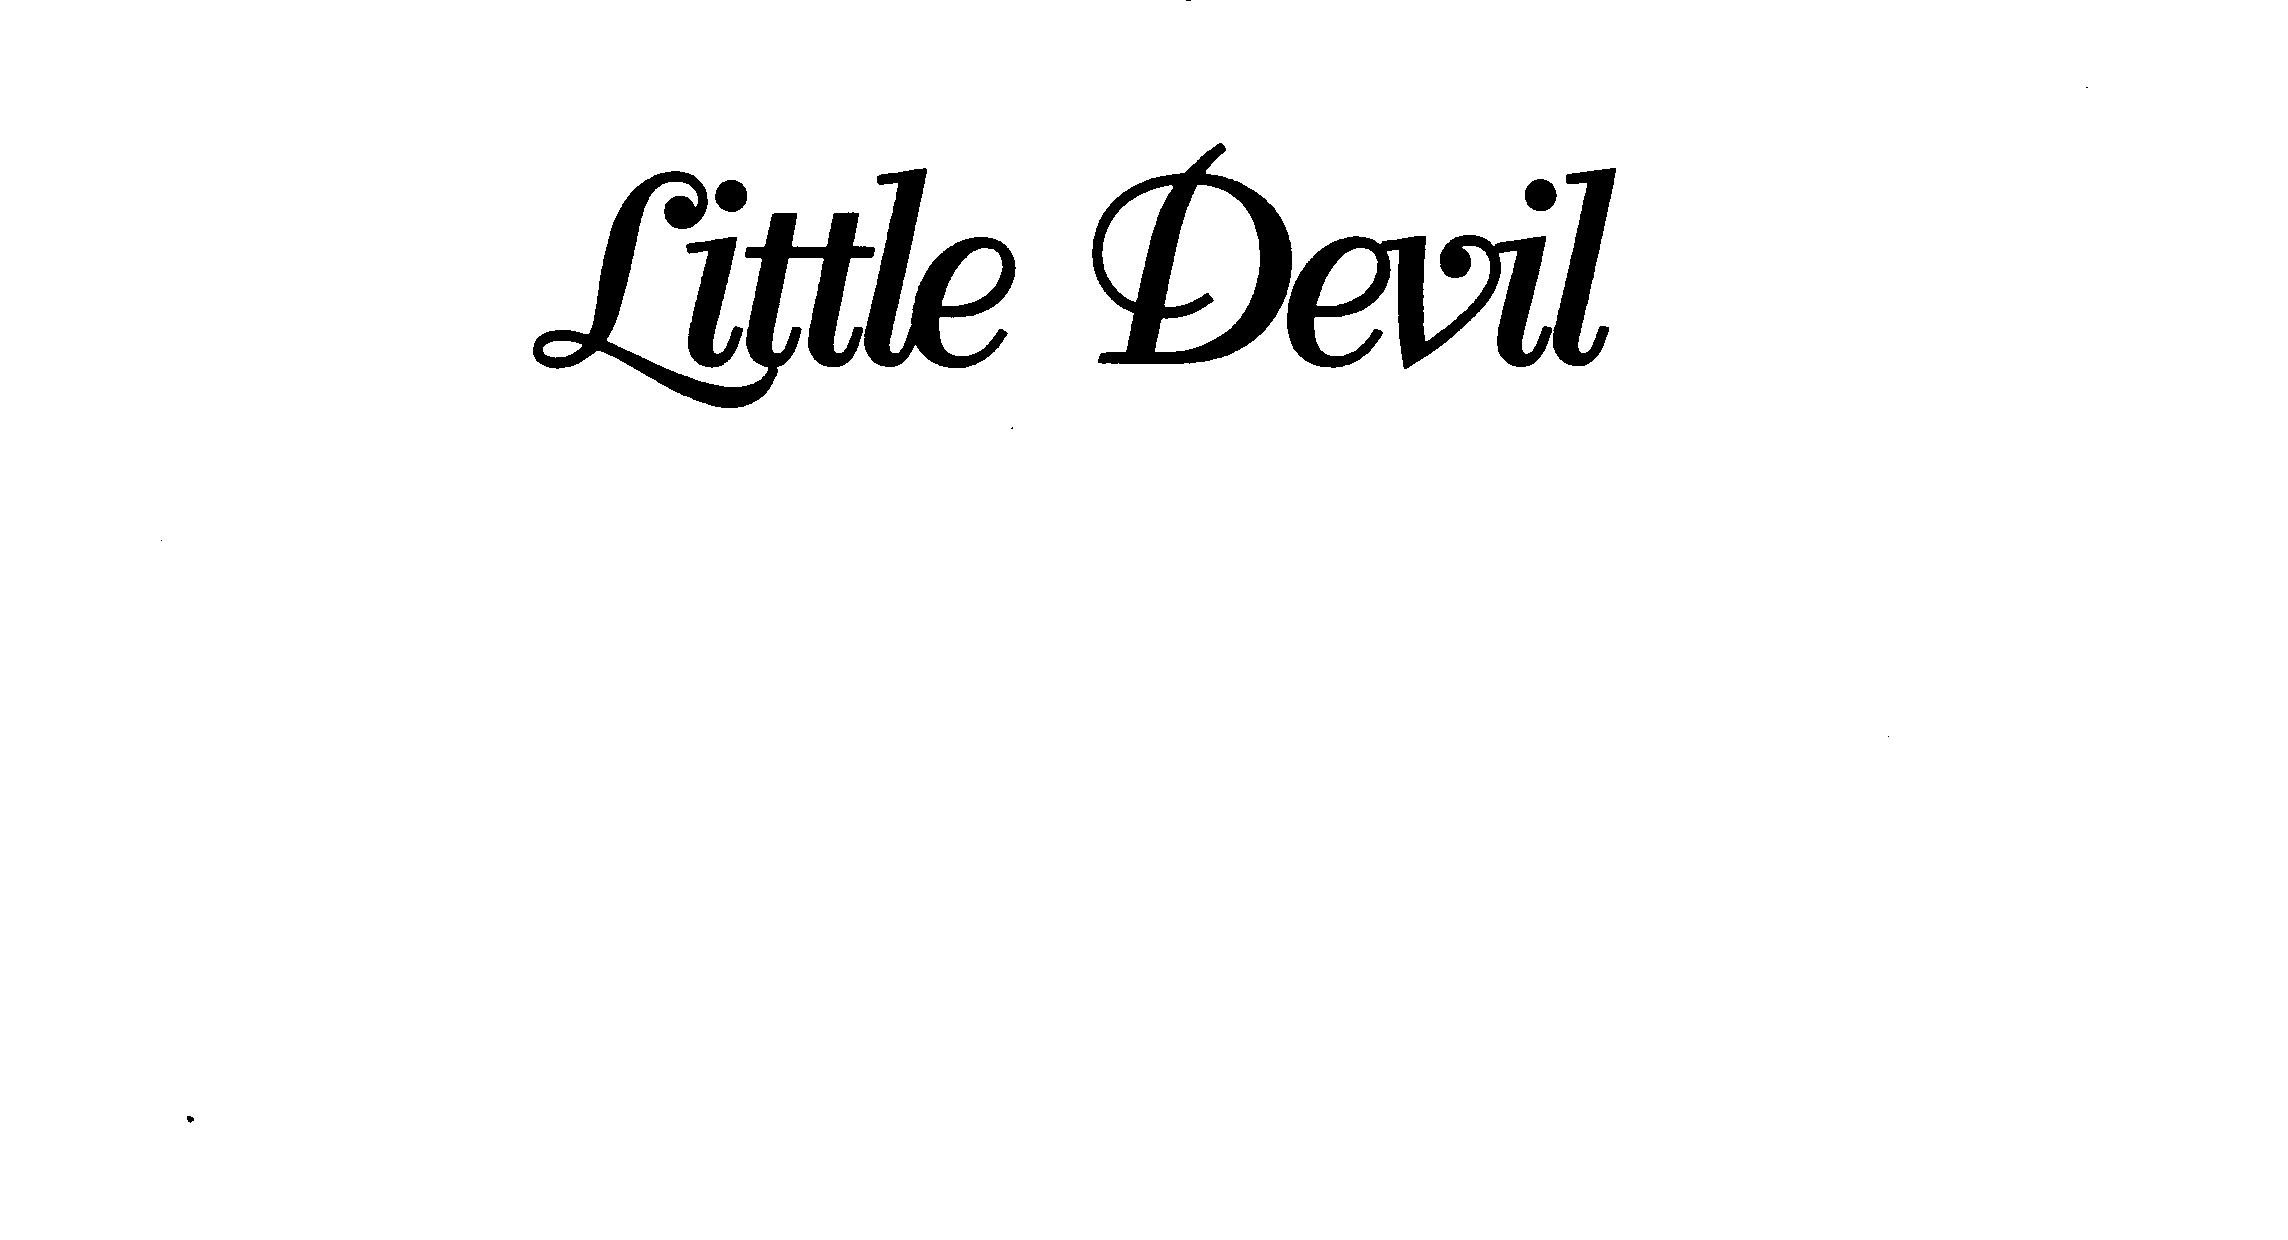  LITTLE DEVIL